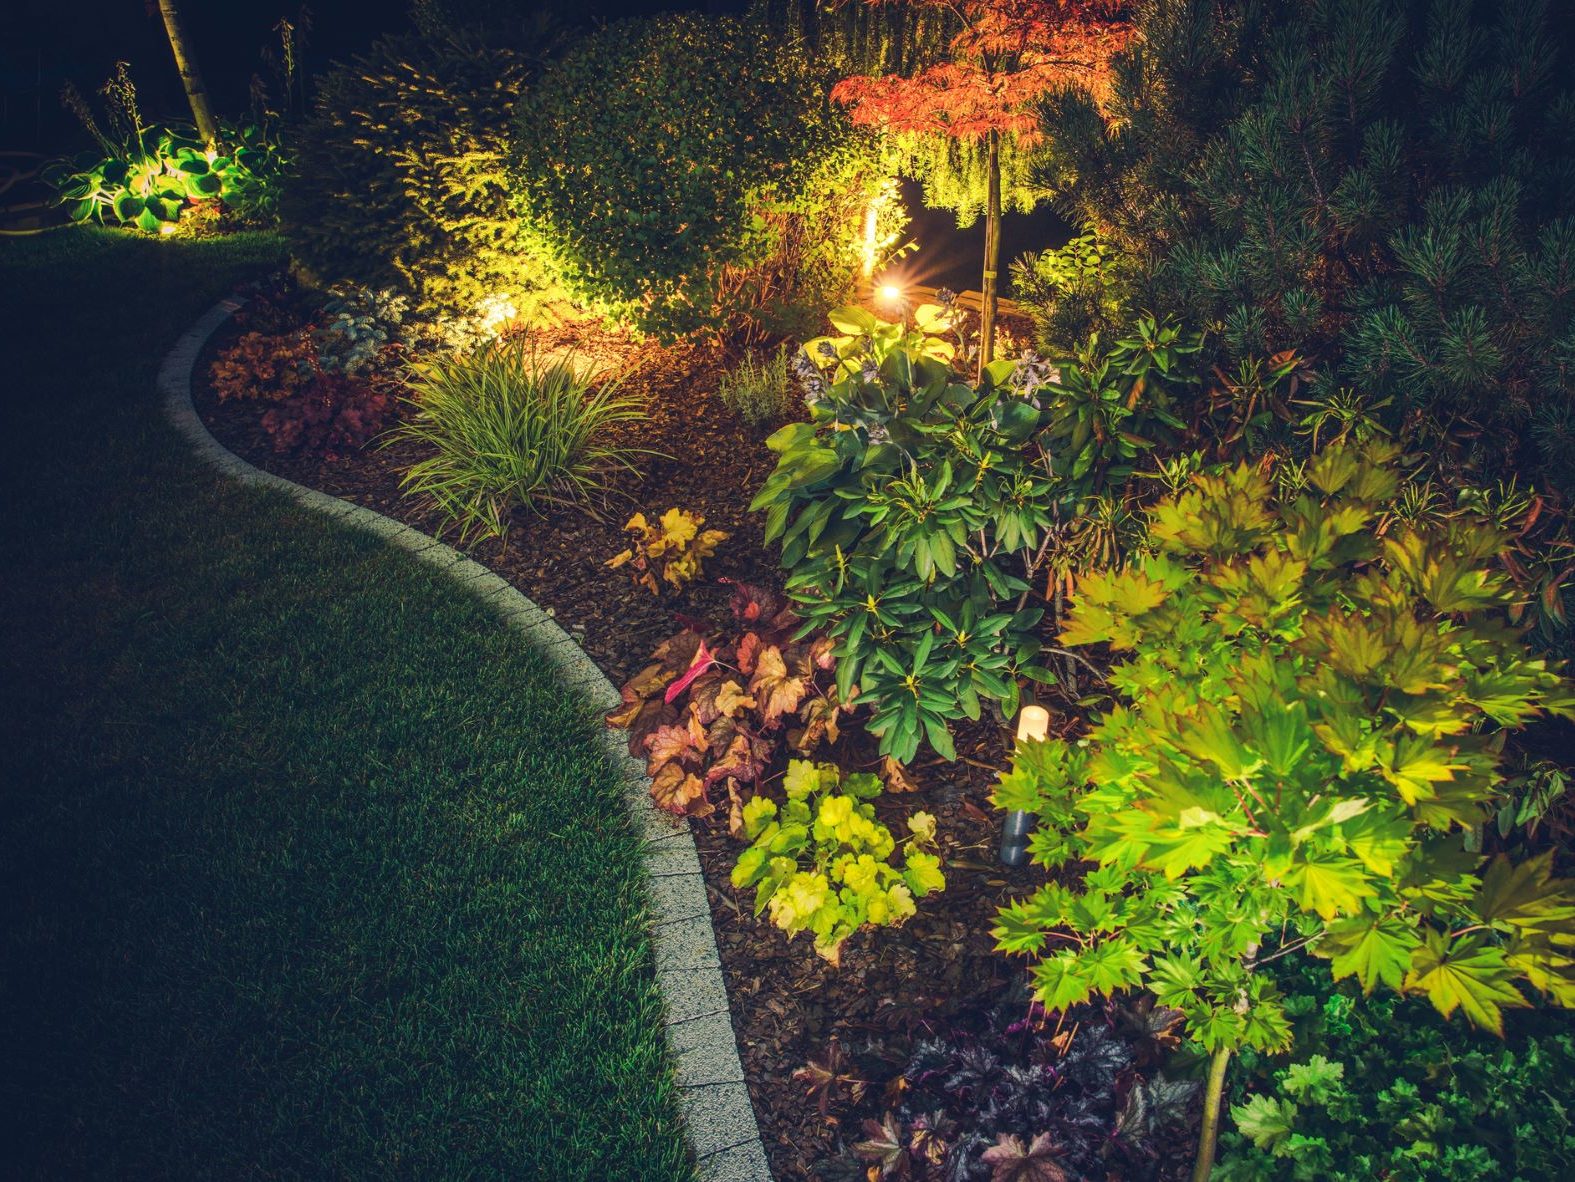 Gardening bed illuminated with lighting